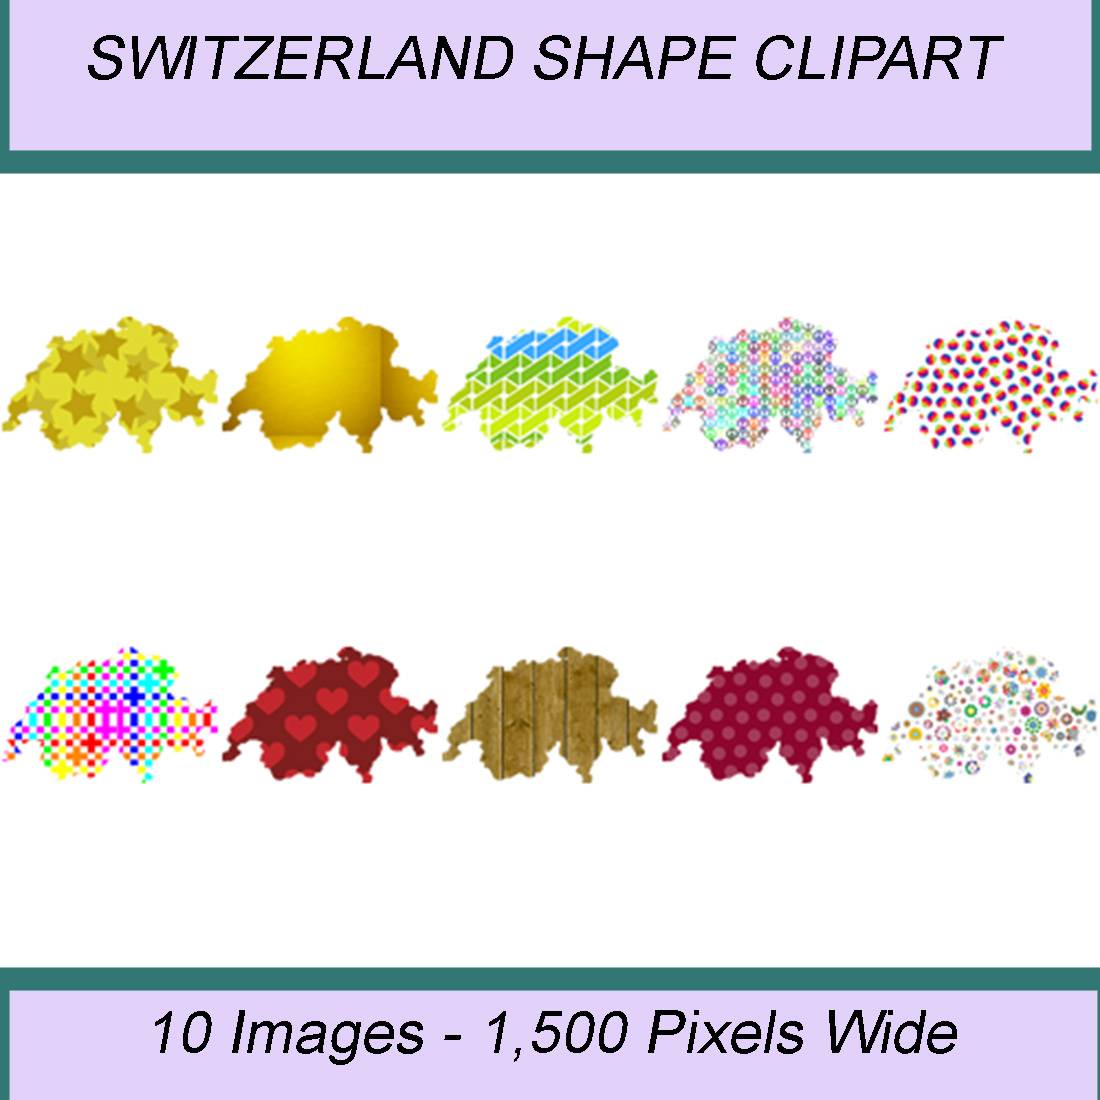 SWITZERLAND SHAPE CLIPART ICONS cover image.